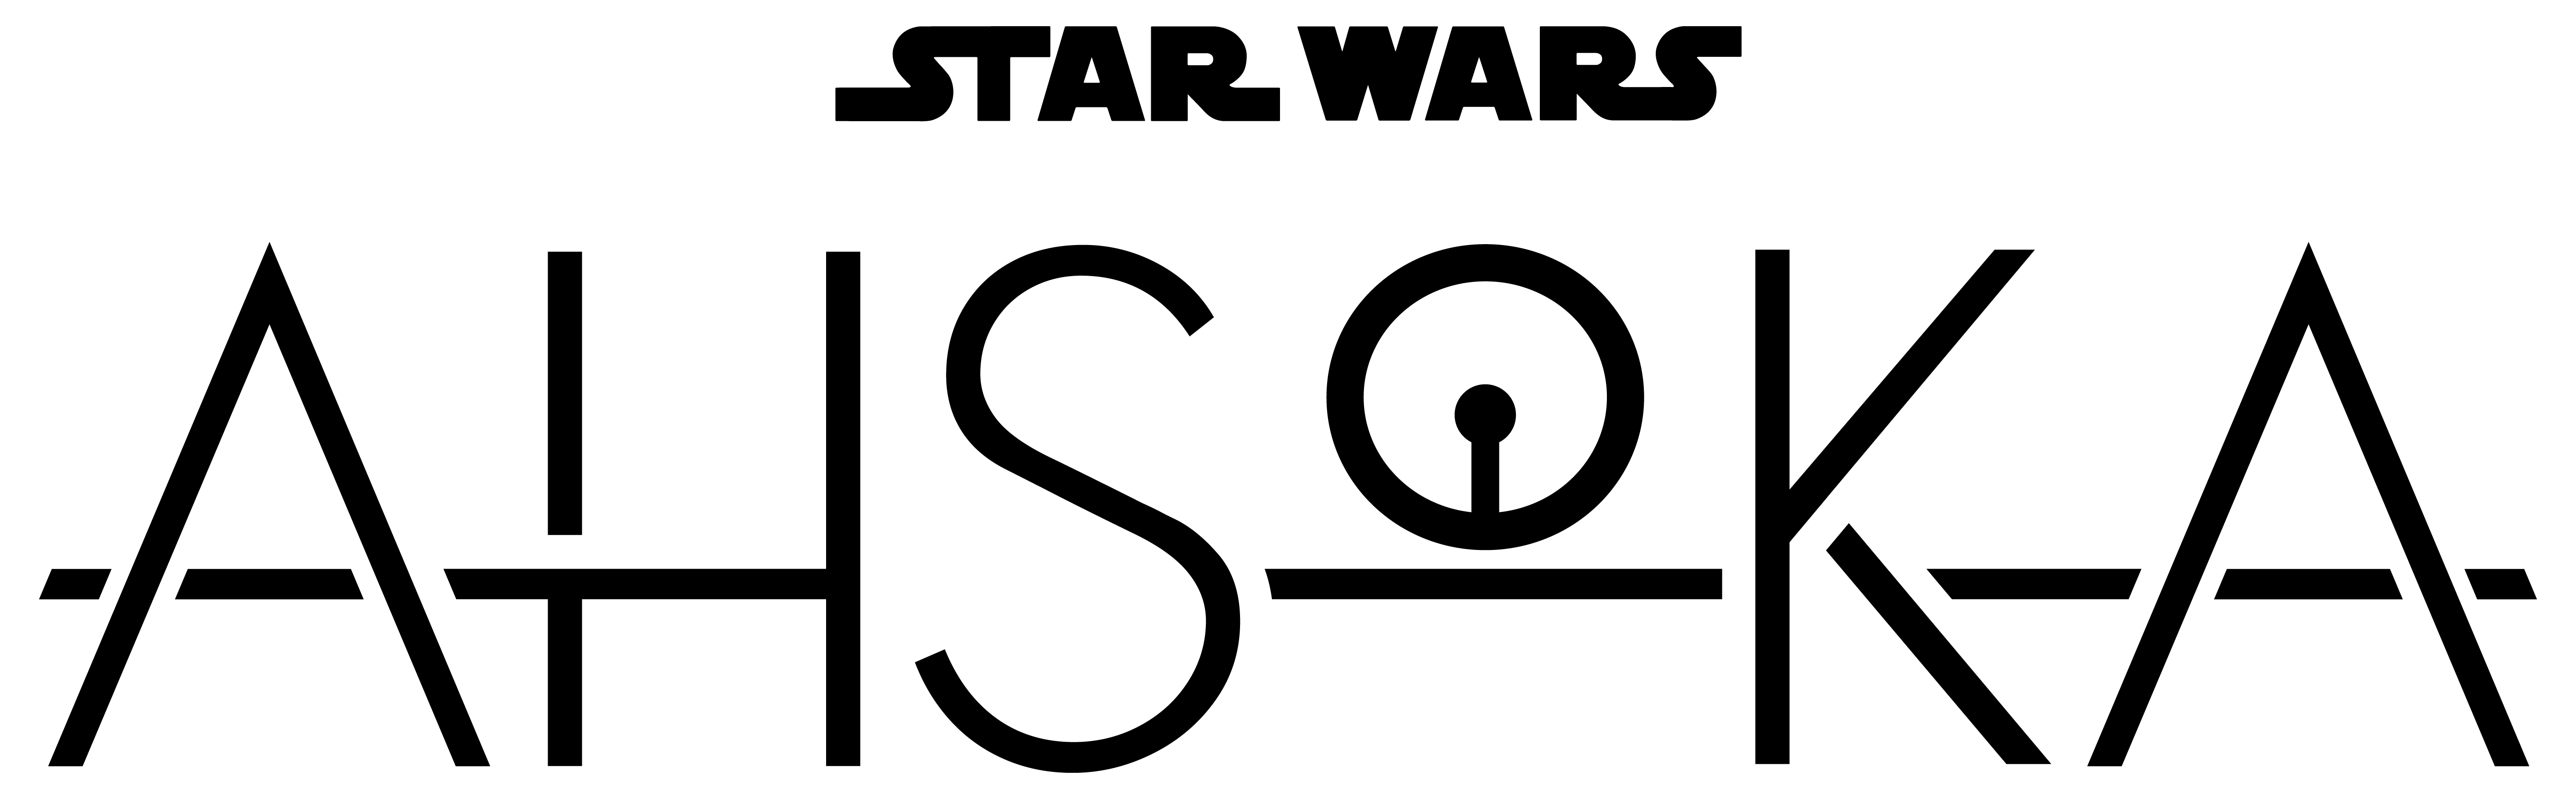 File:Star Wars VIII logo.png - Wikimedia Commons